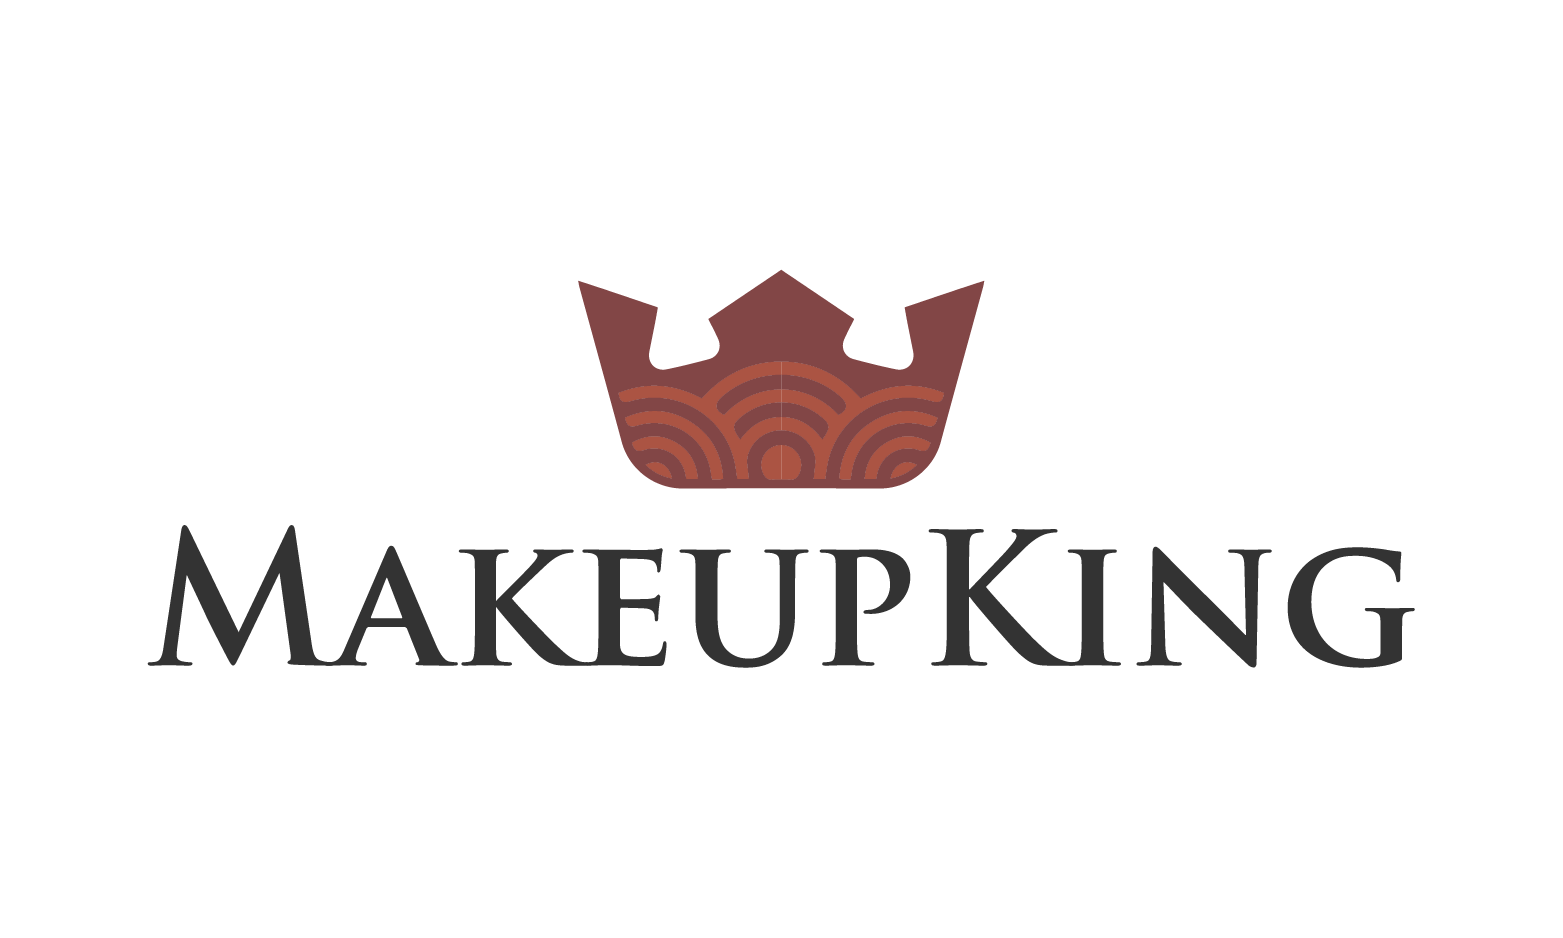 MakeupKing.com - Creative brandable domain for sale